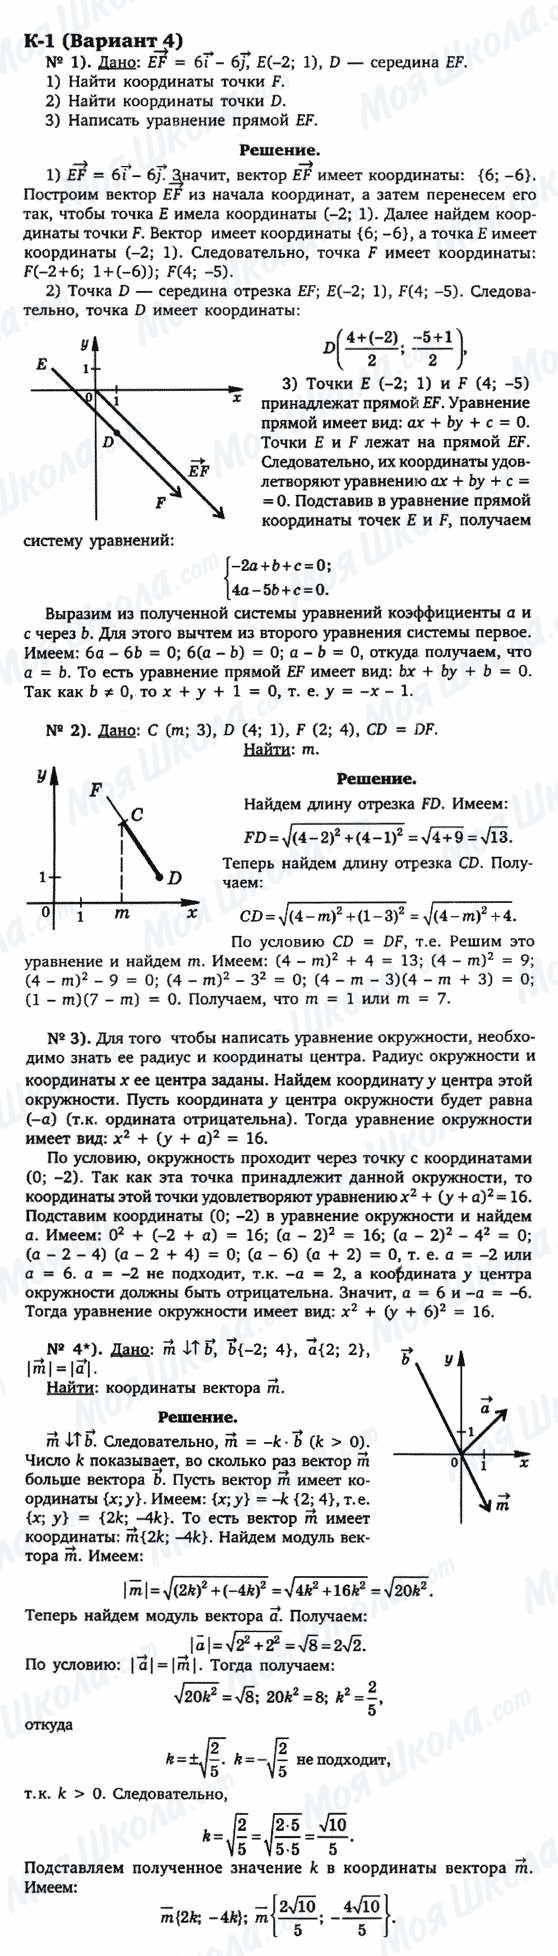 ГДЗ Геометрия 9 класс страница к-1(вариант 4)